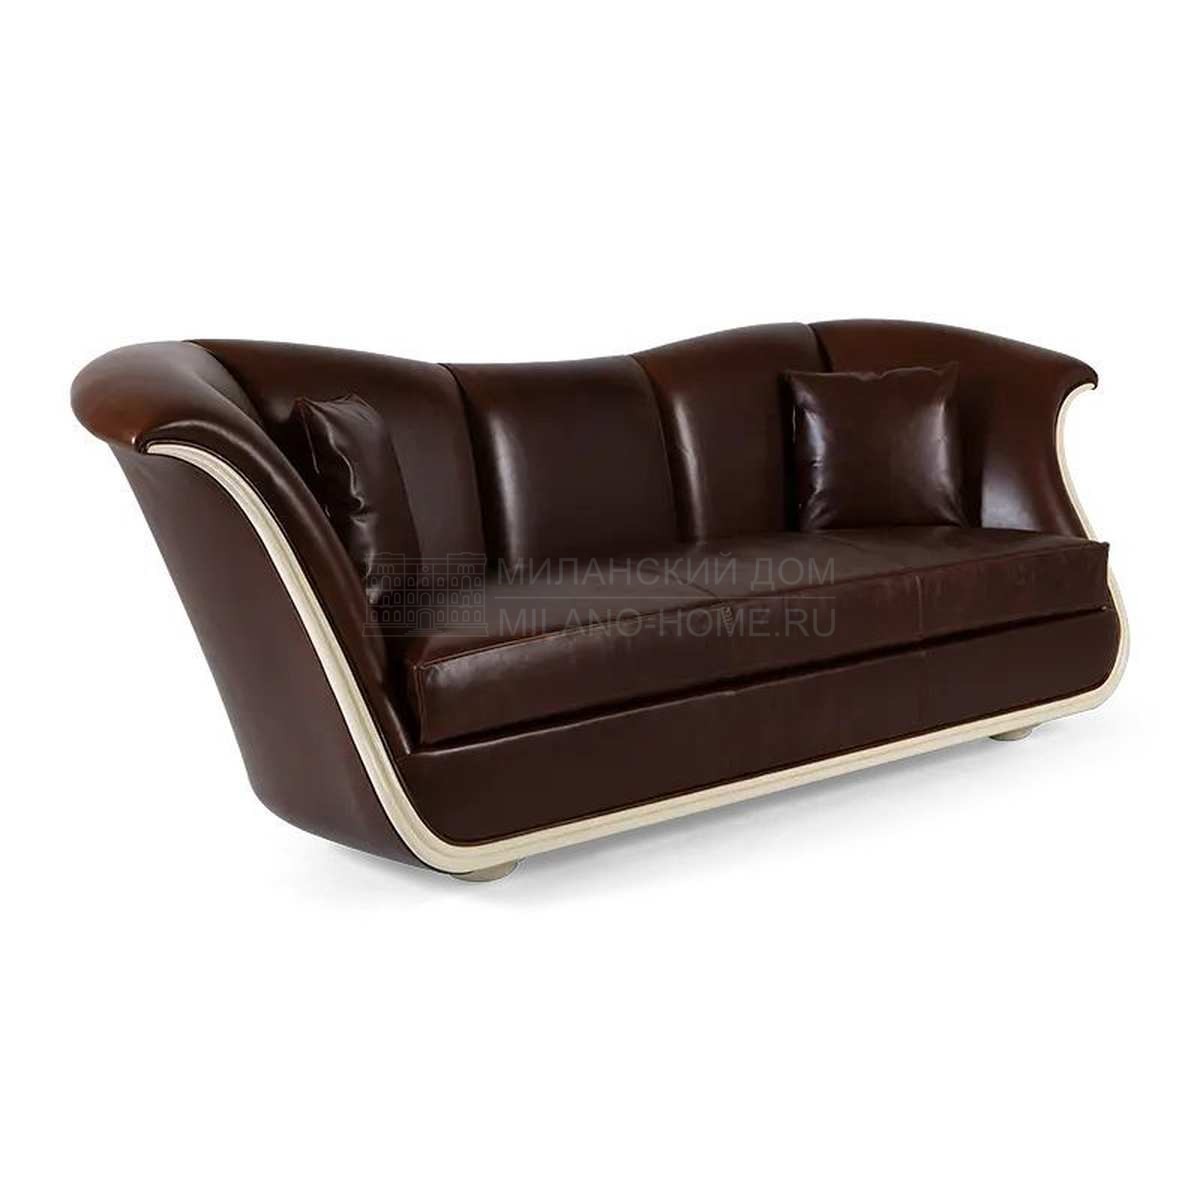 Прямой диван Bellocq sofa из США фабрики CHRISTOPHER GUY